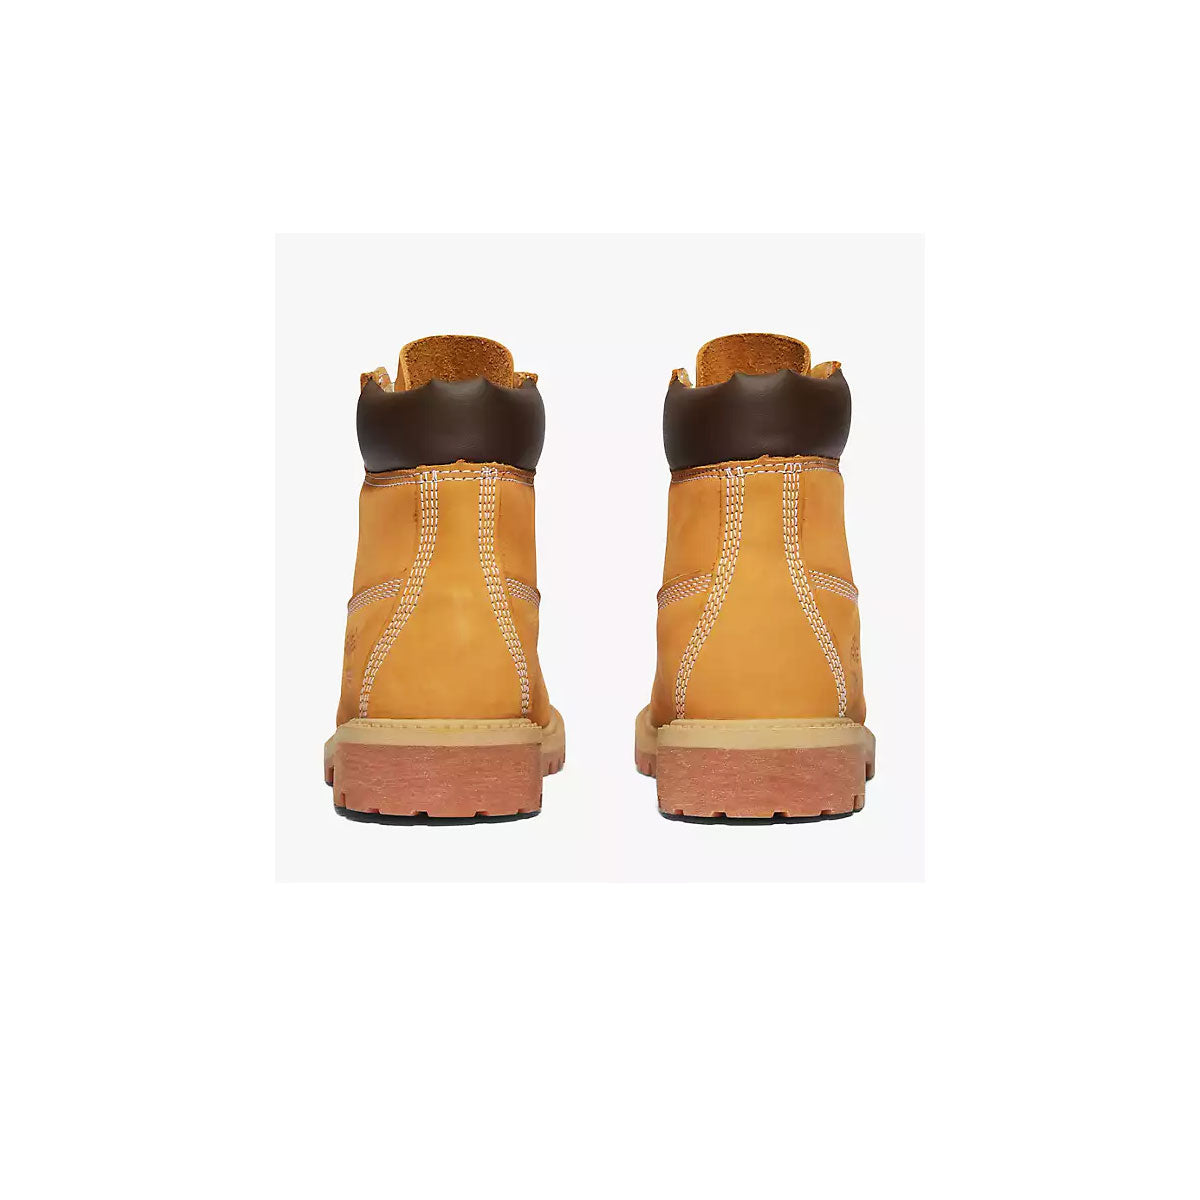 Timberland JR Premium 6-Inch Waterproof Boots